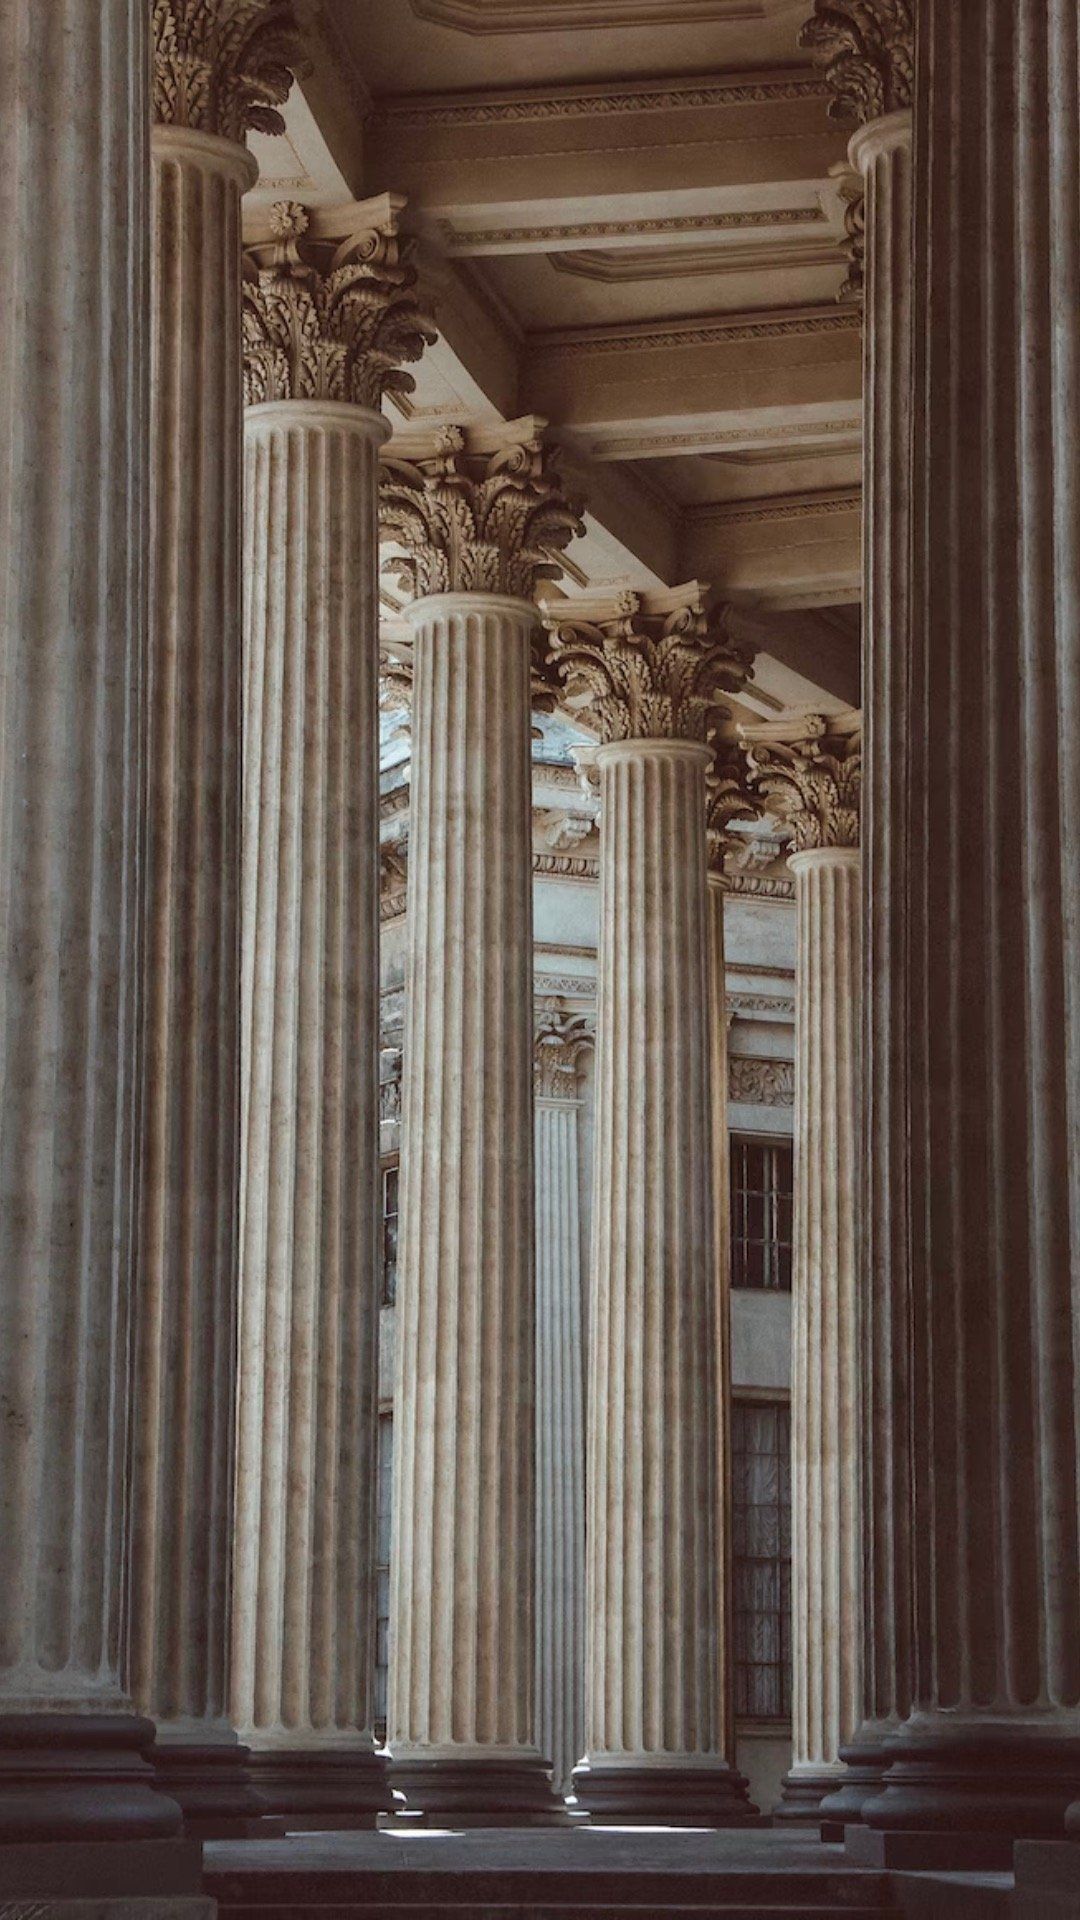 Columns of a building - Architecture, Greek statue